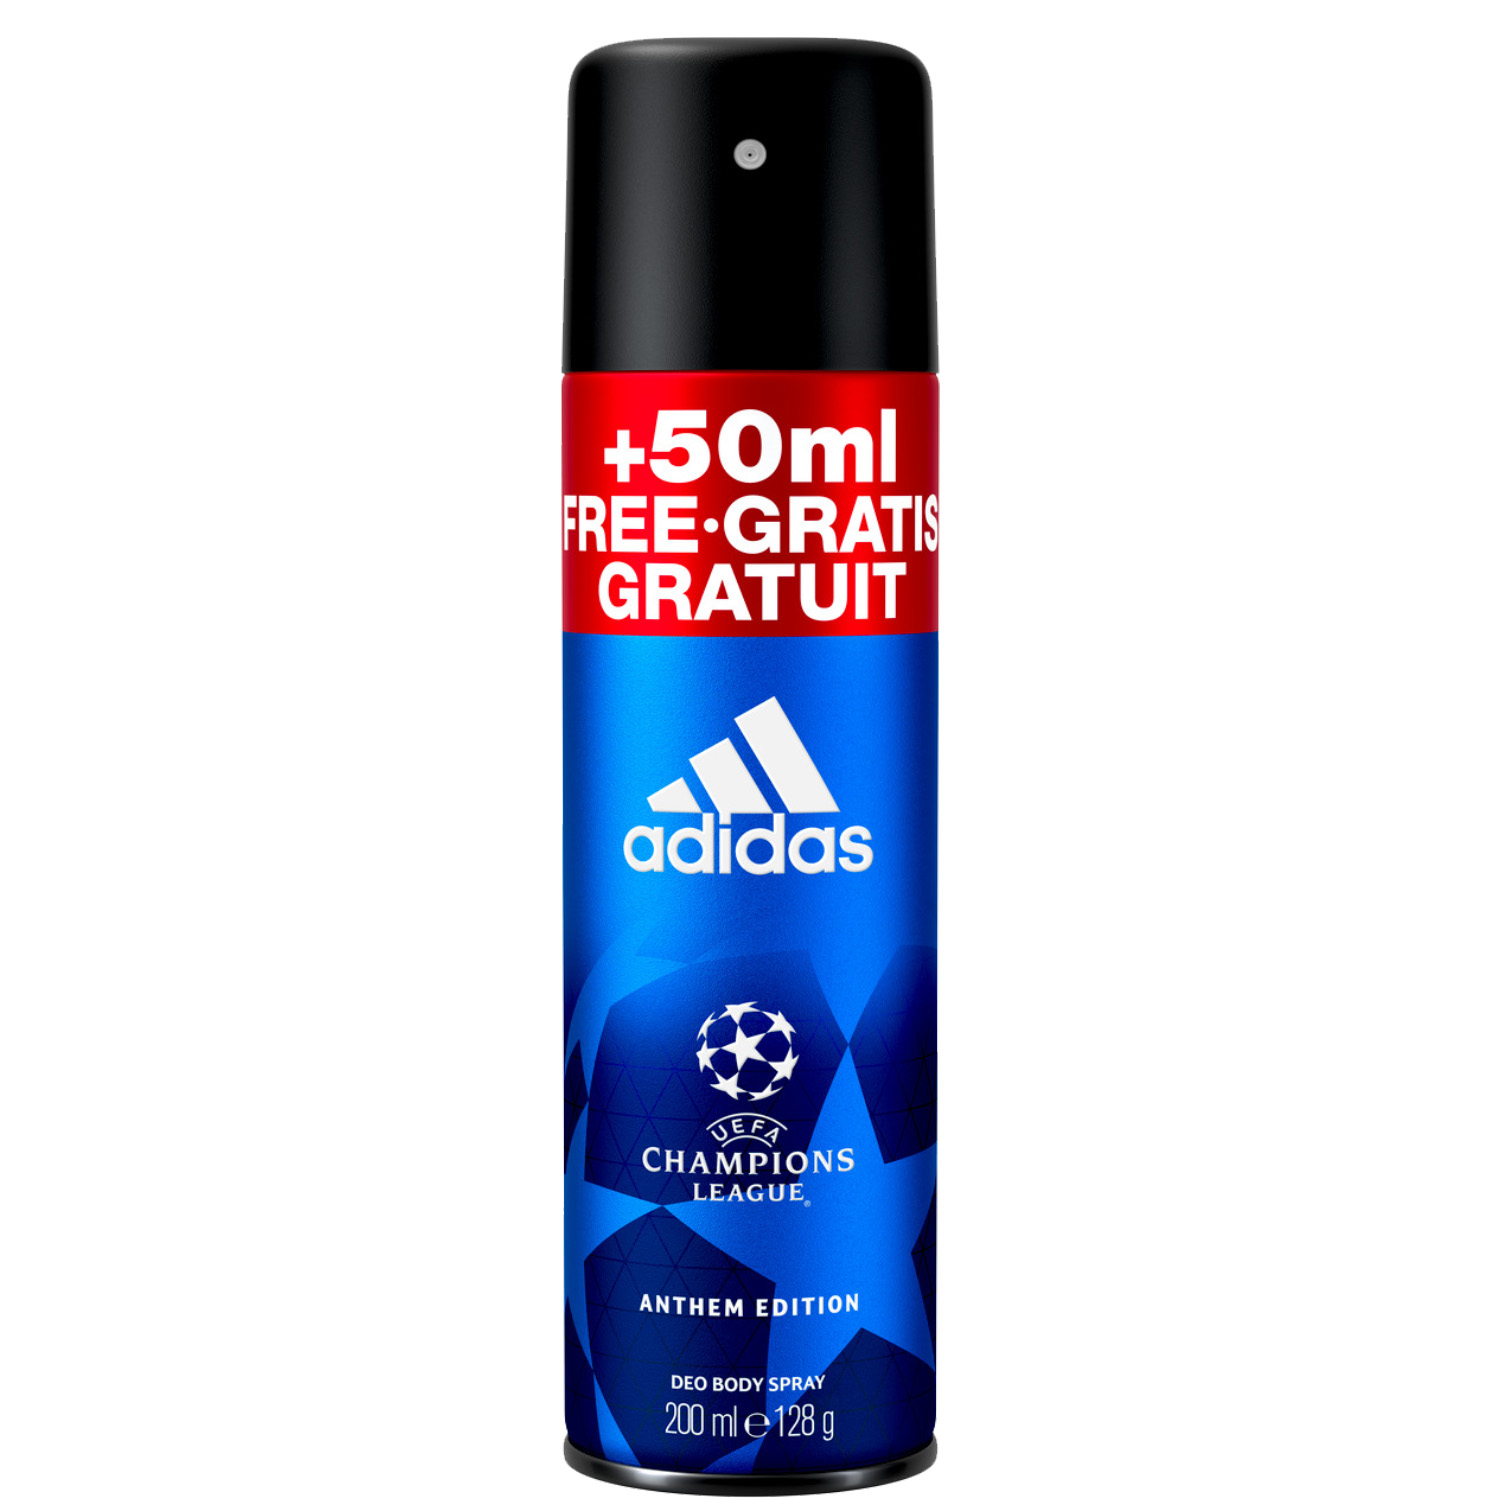 Adidas UEFA Champions League Anthem Edition Deodorant Body Spray 150ml + 50ml GRATIS